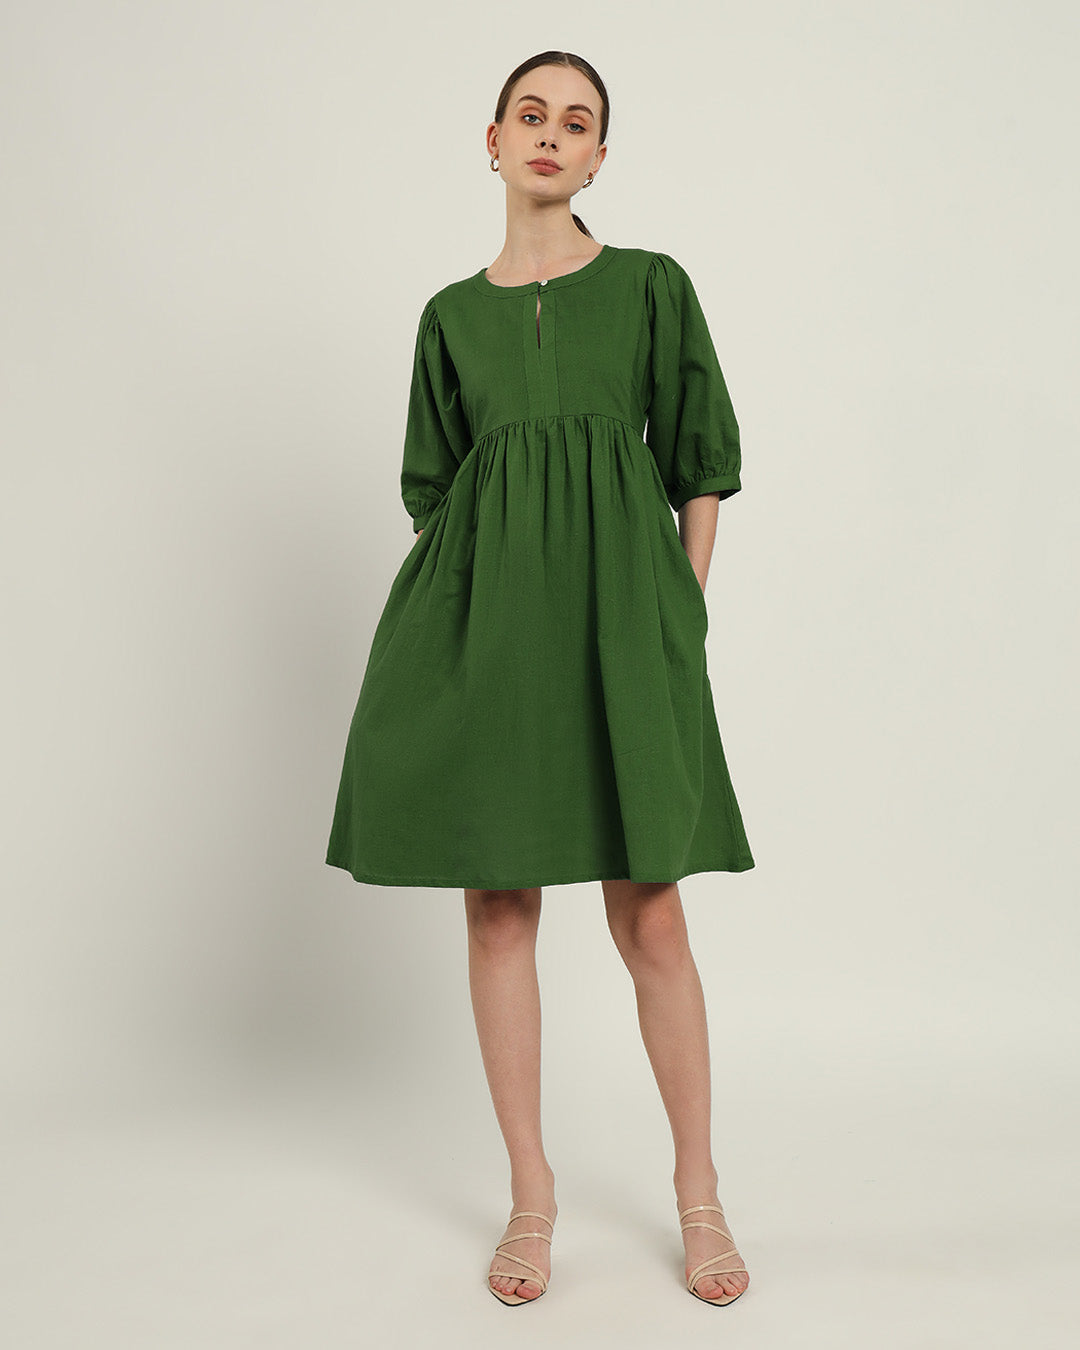 The Aira Emerald Cotton Dress